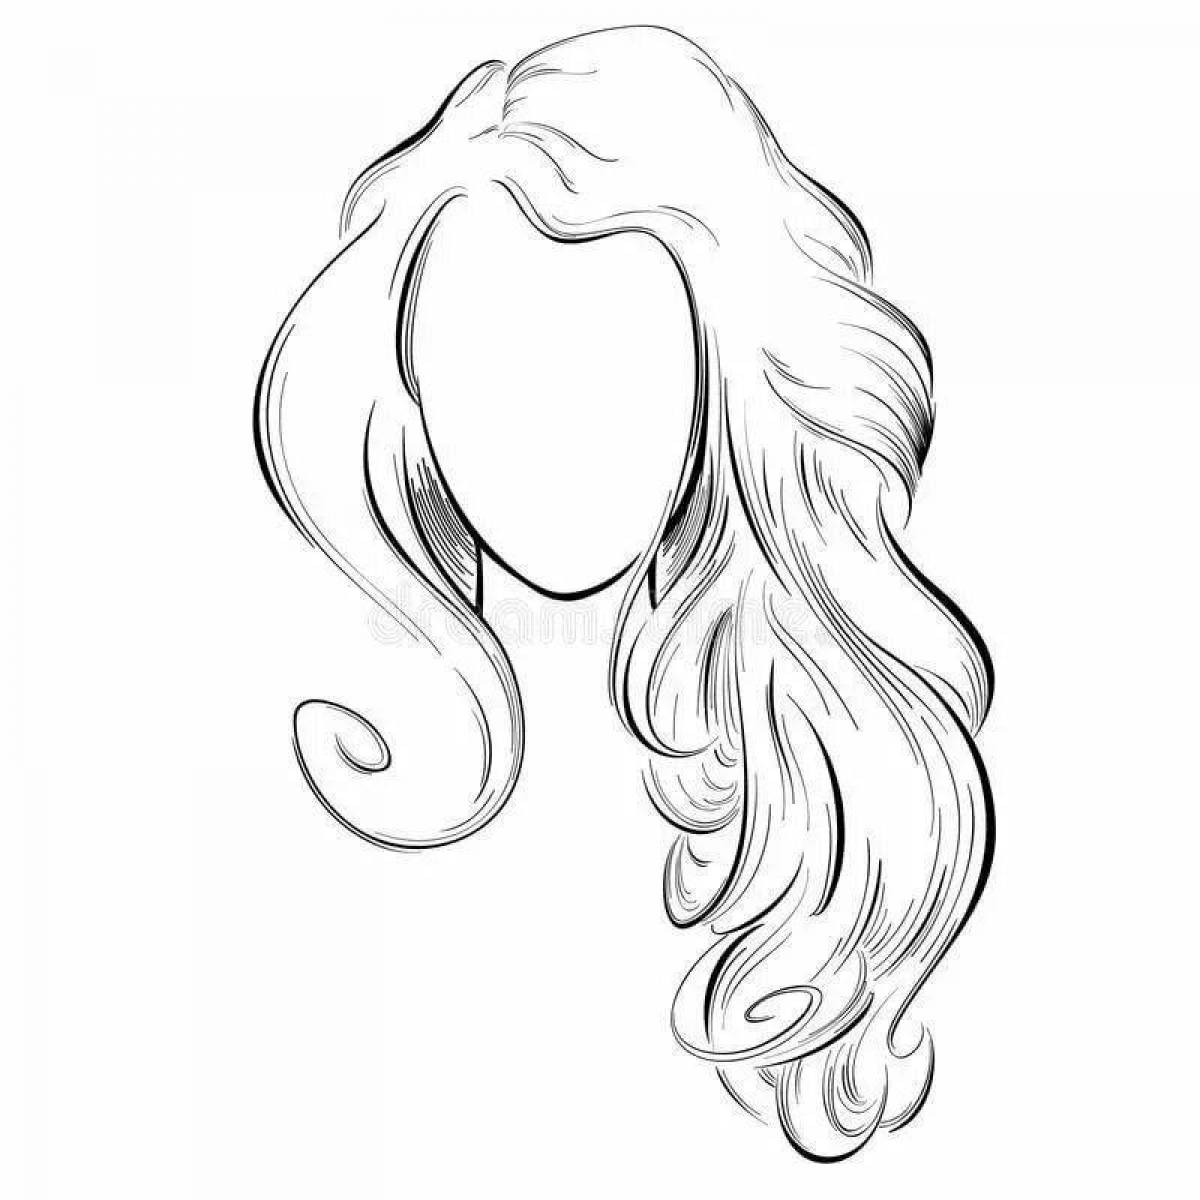 Шаблон лица для рисования волос